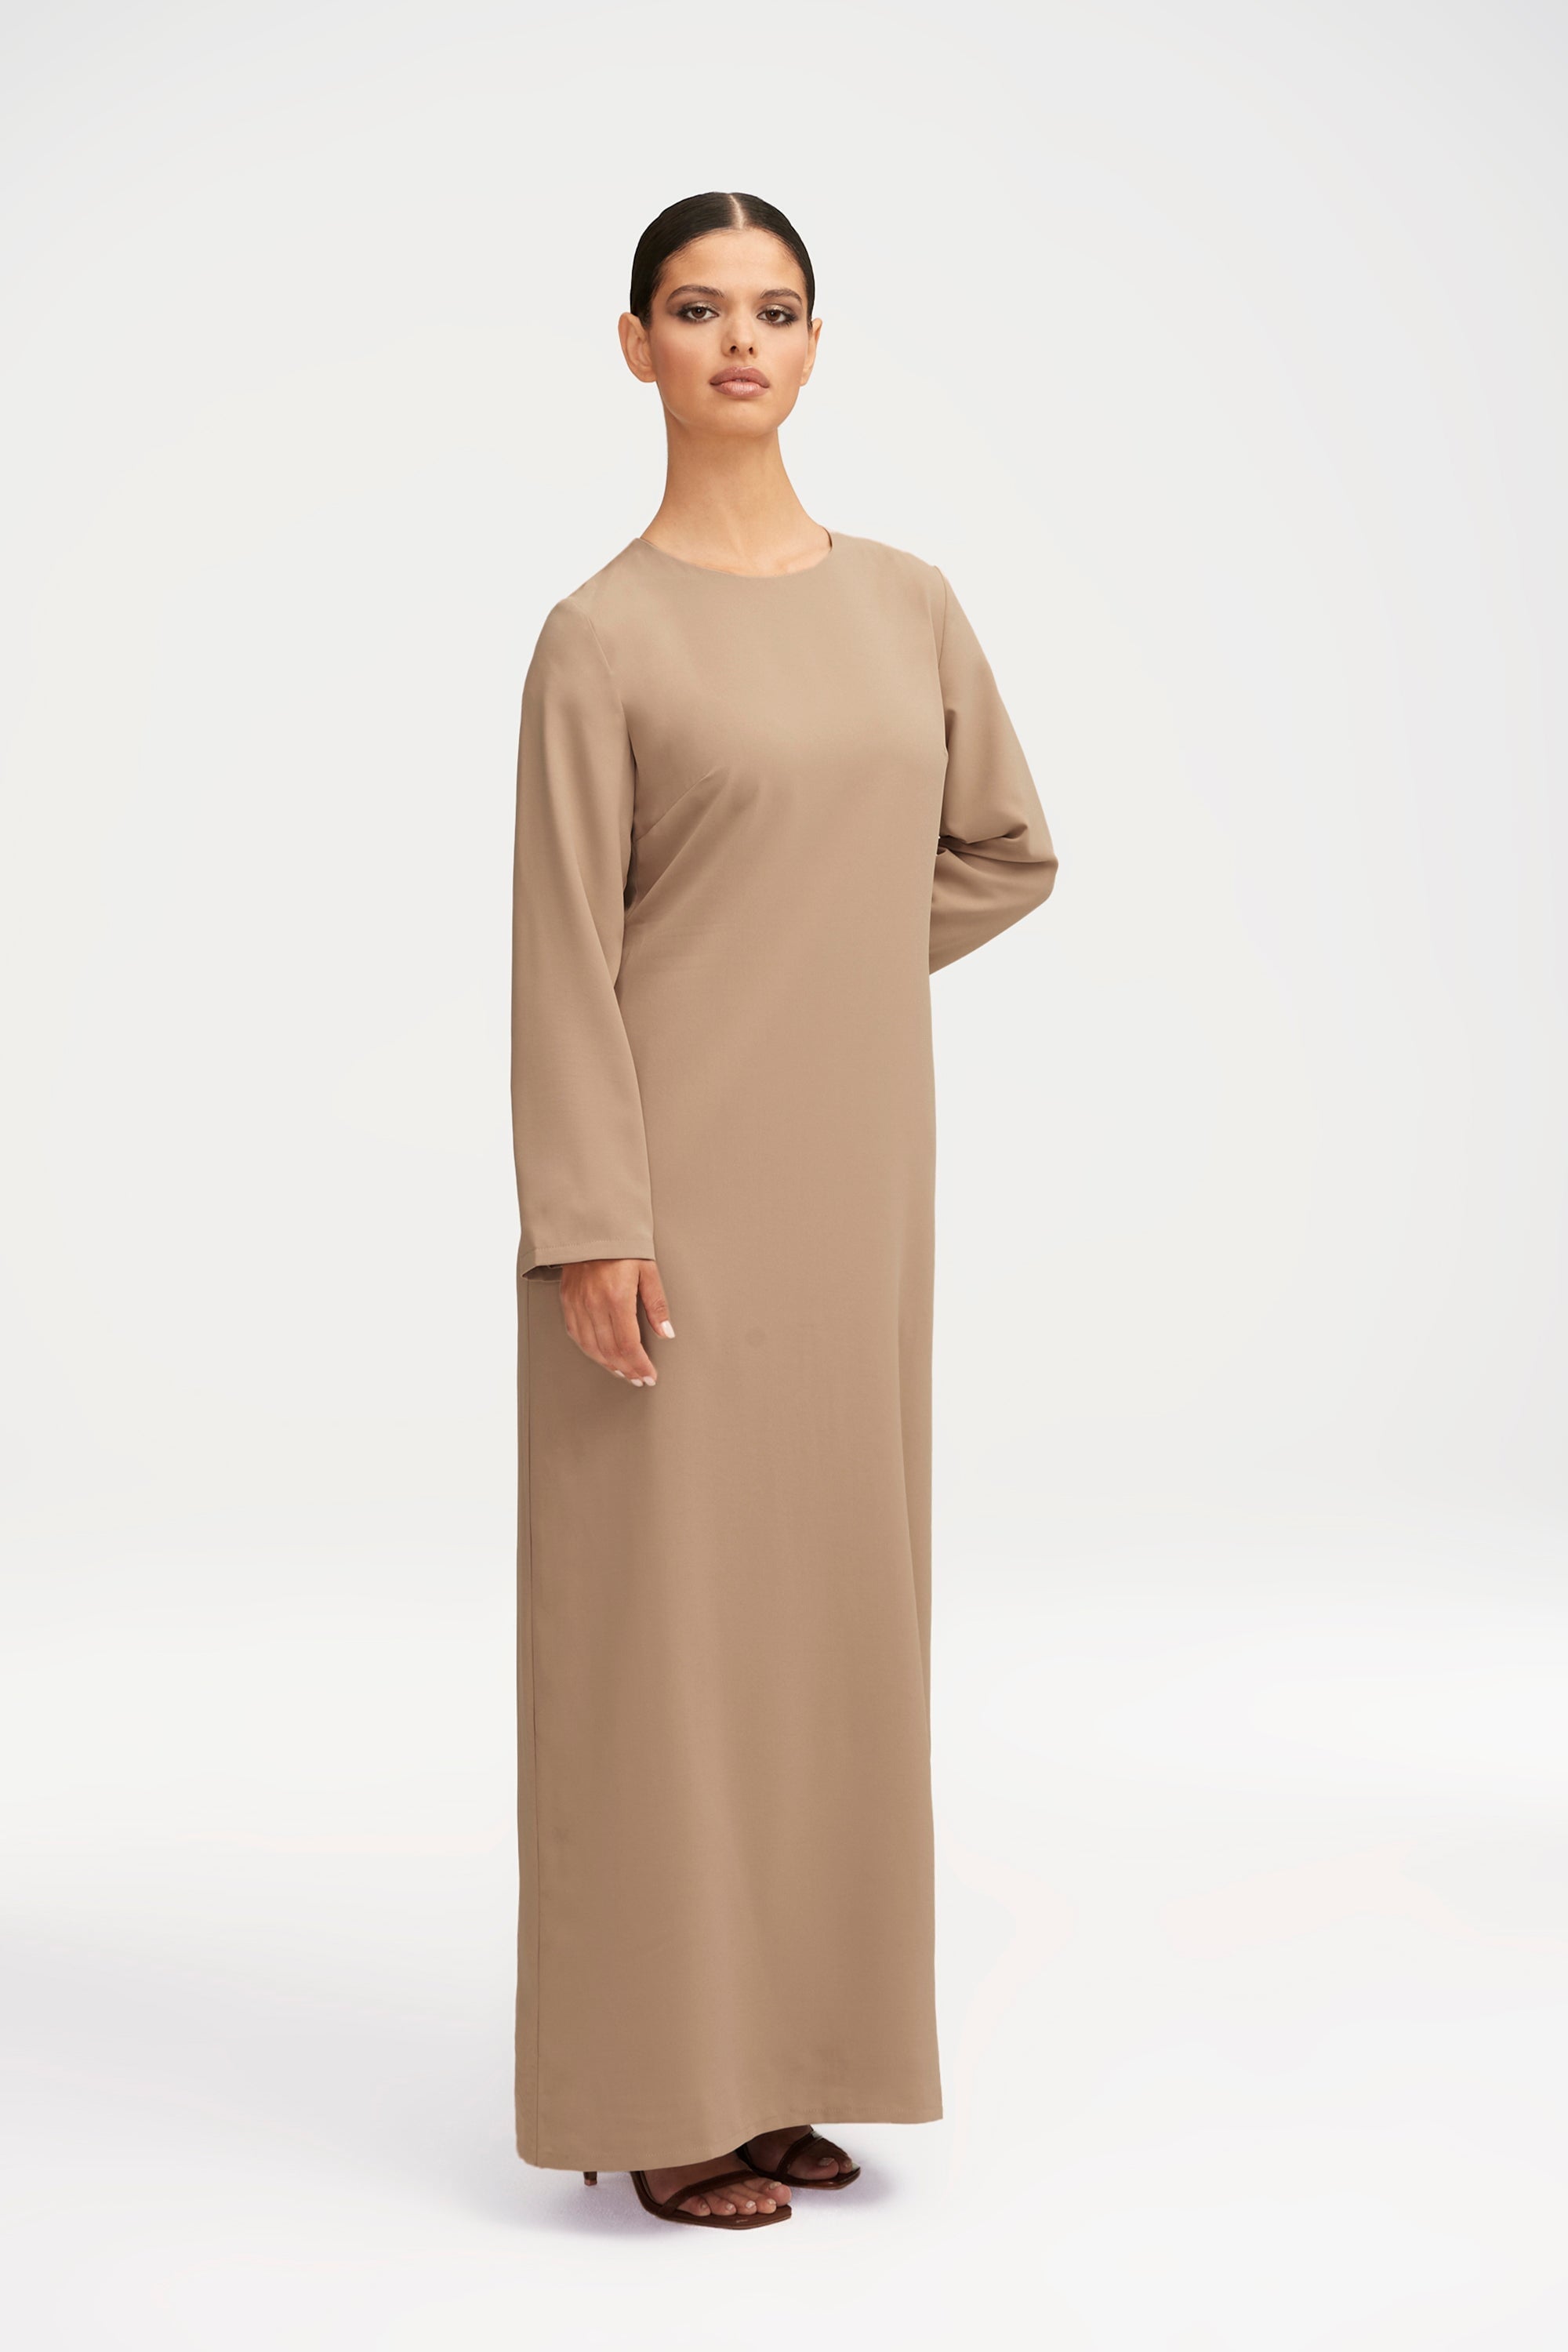 Essential Basic Maxi Dress - Caffe Clothing Veiled 